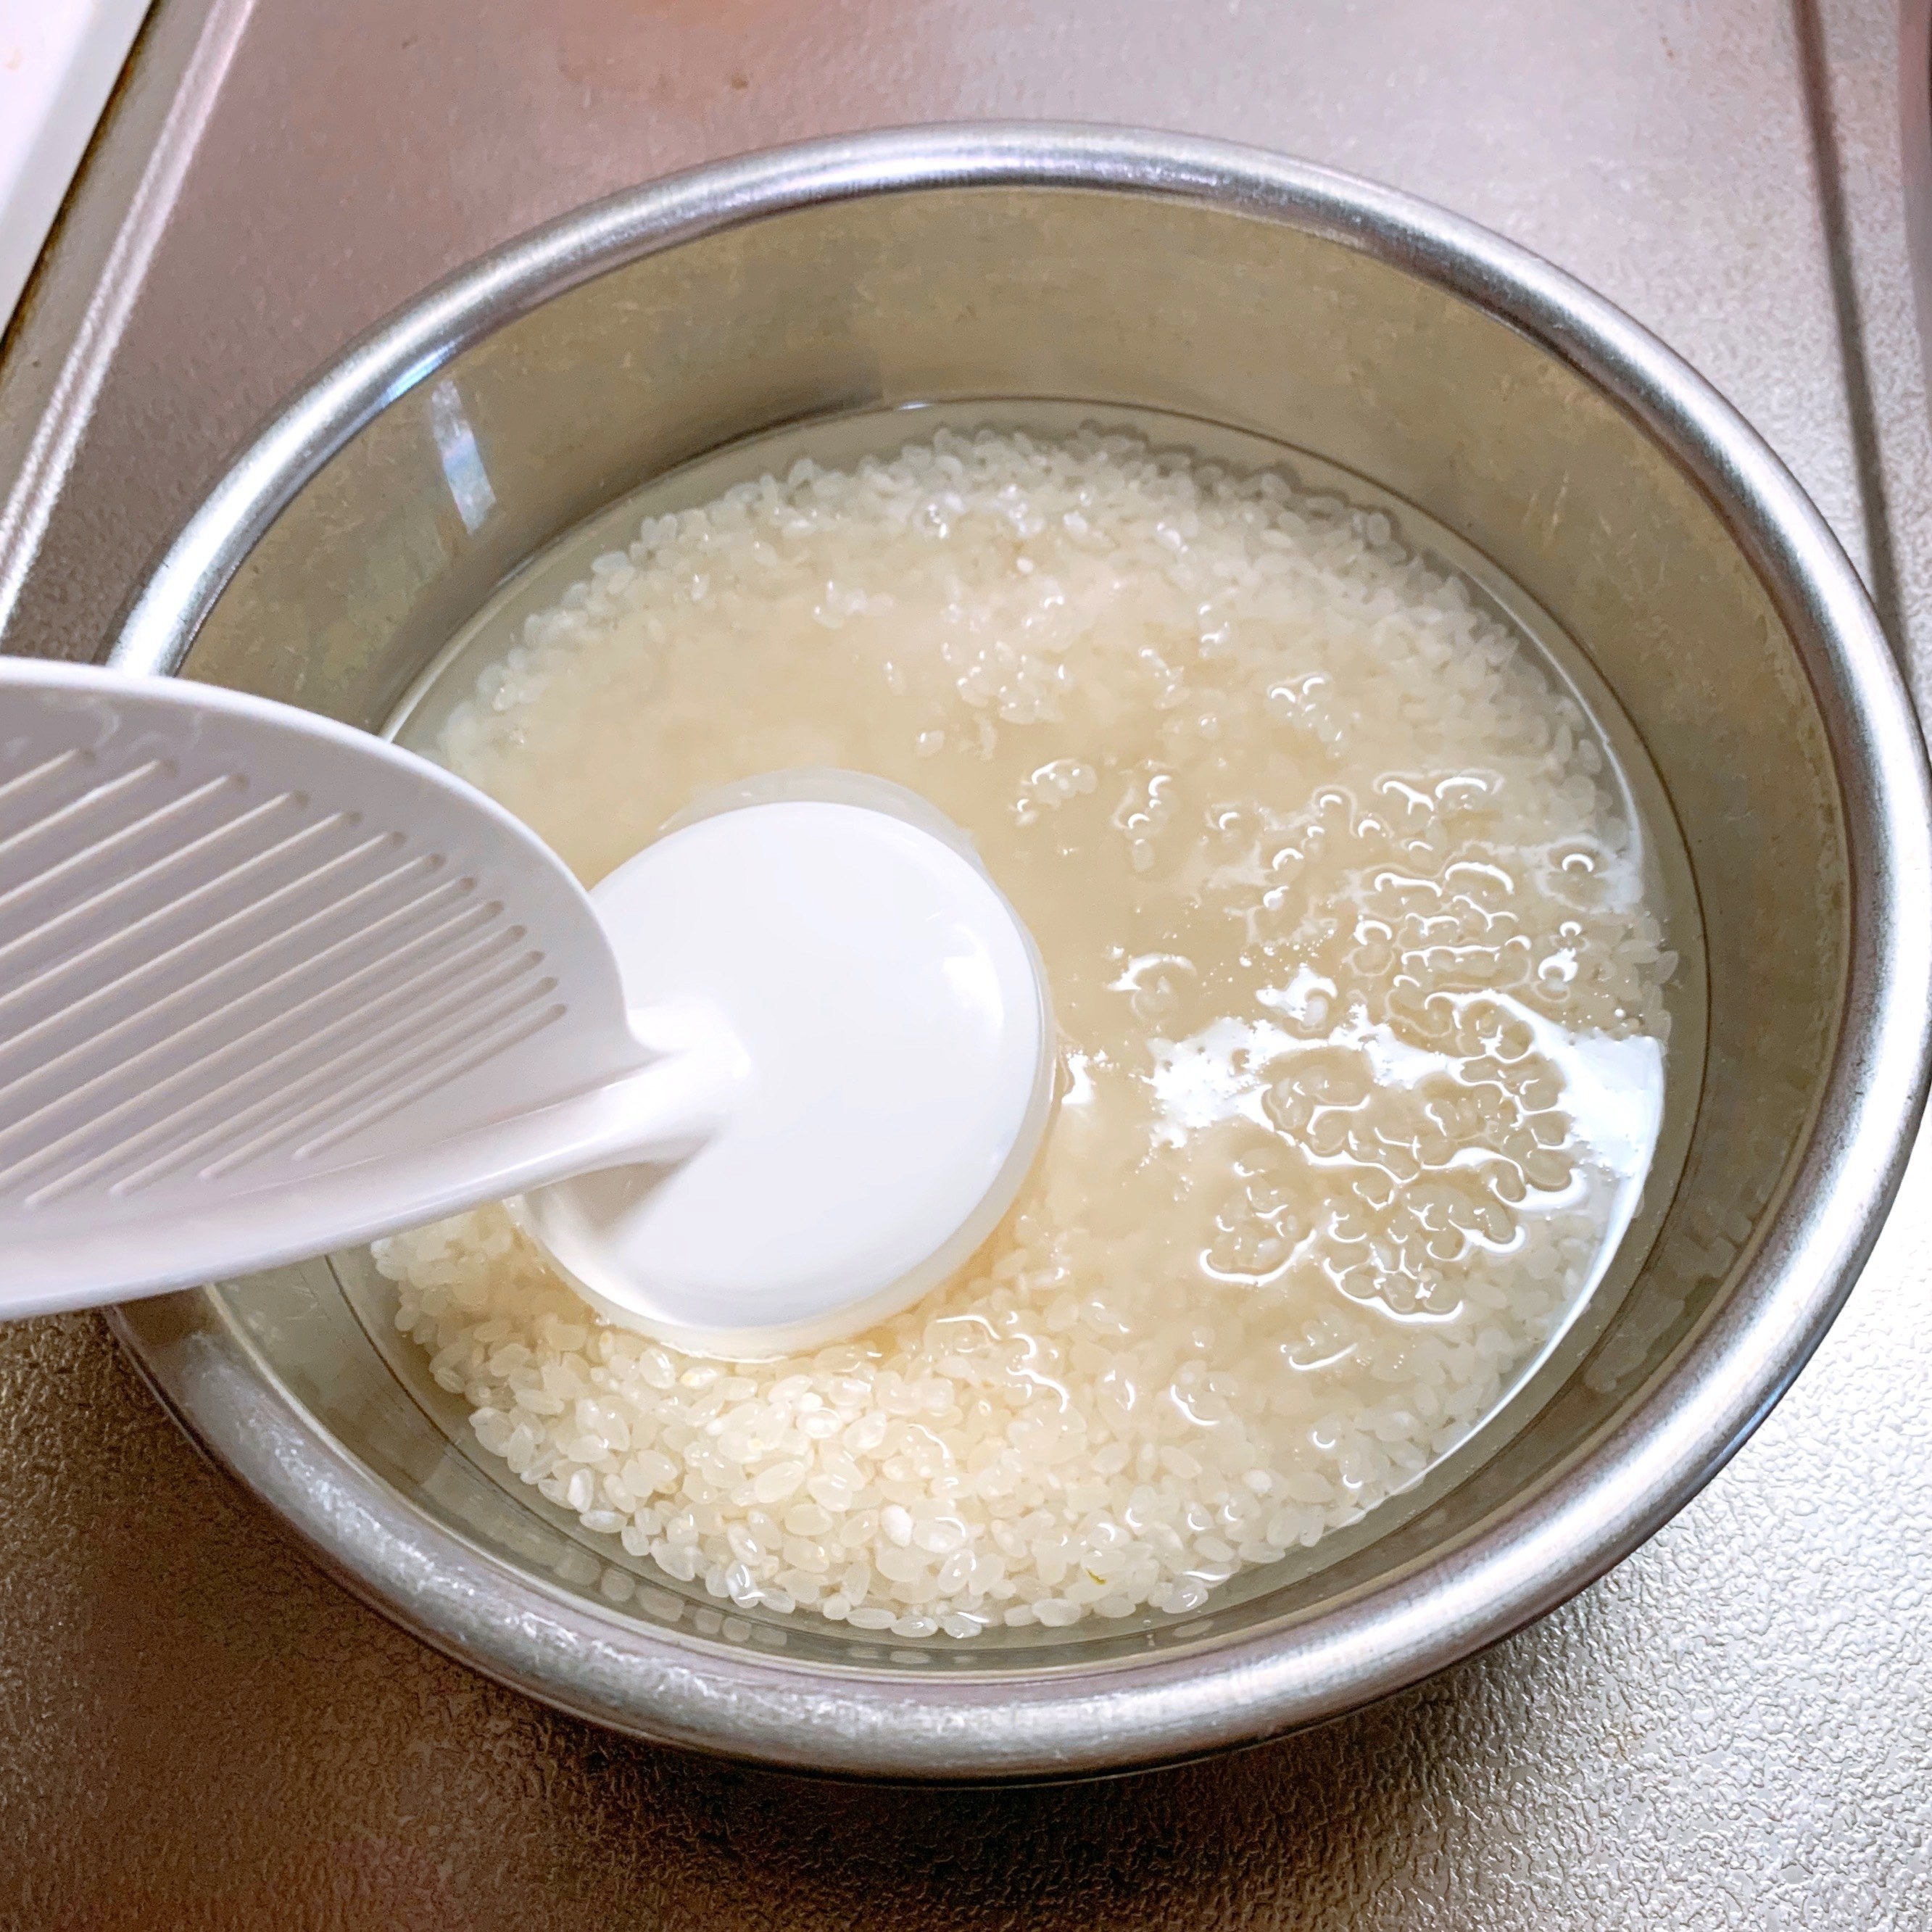 DAISO（ダイソー）のおすすめアイデア調理グッズ「なるほど米とぎ」便利で大人気